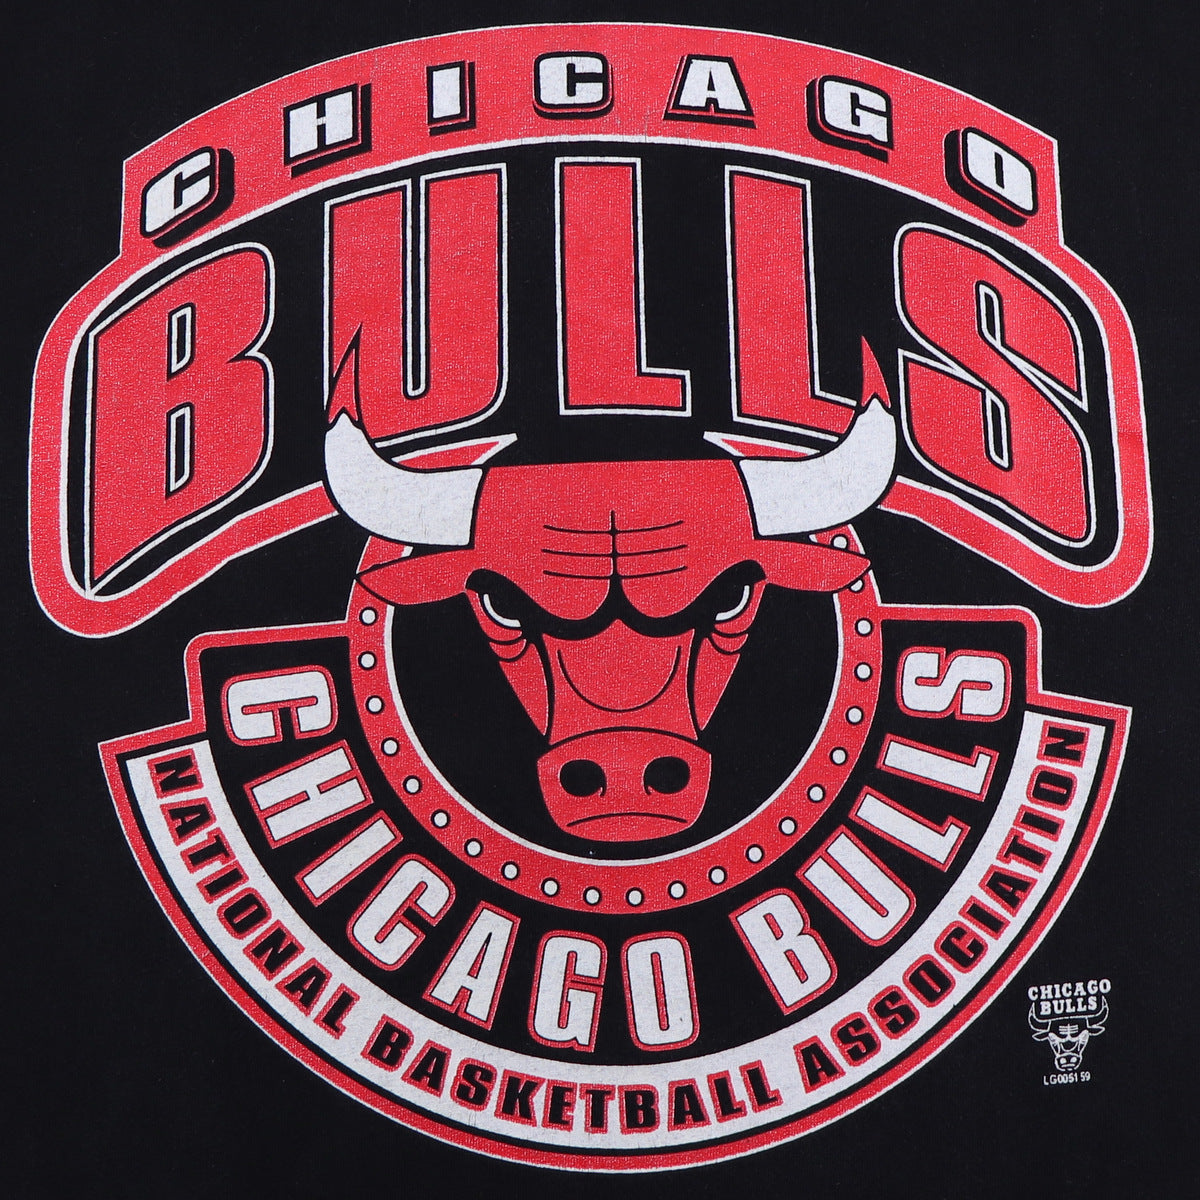 Chicago Bulls 1990s NBA Shirt